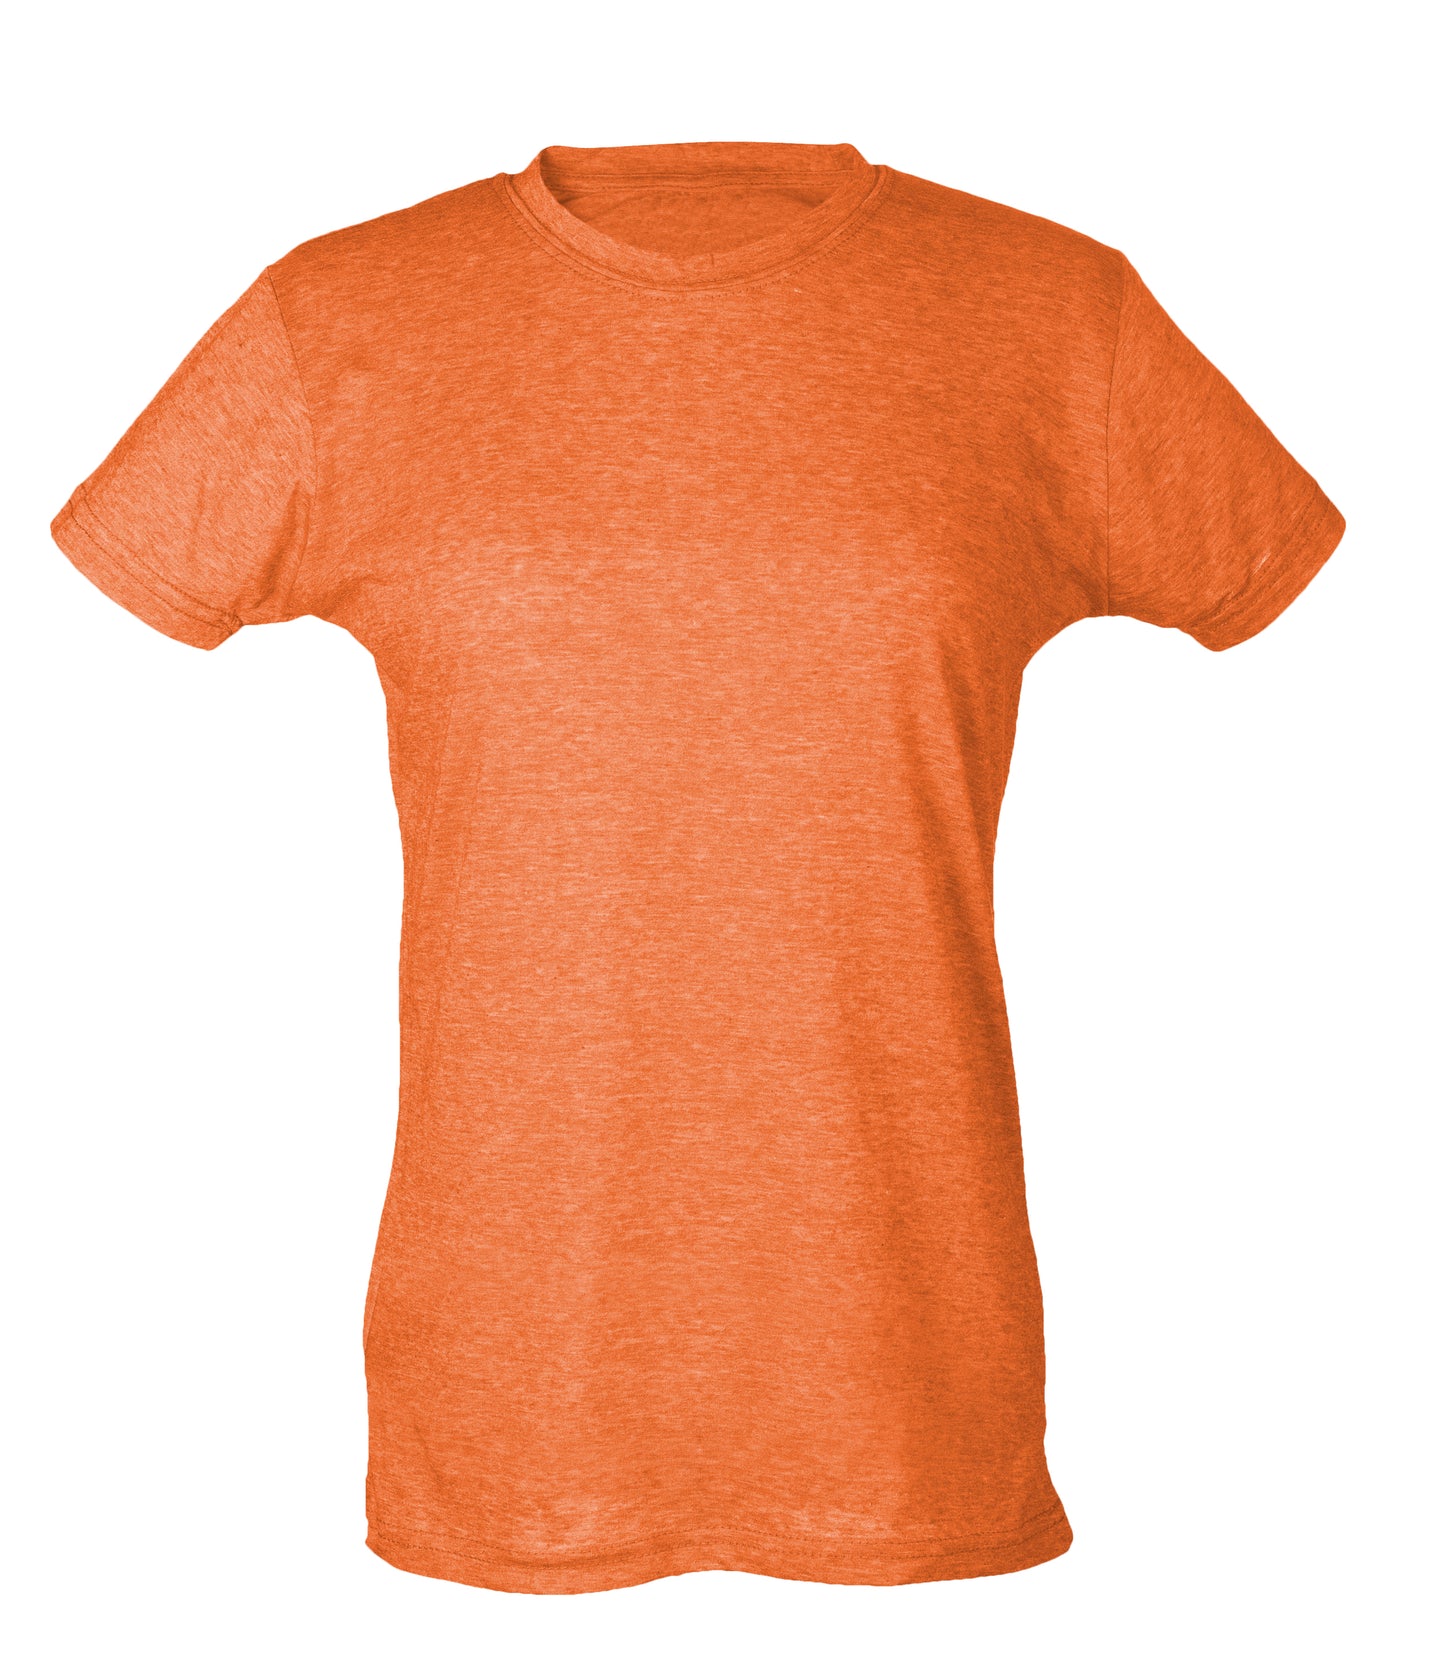 Tultex 240 - Women's Poly-Rich Slim Fit T-Shirt